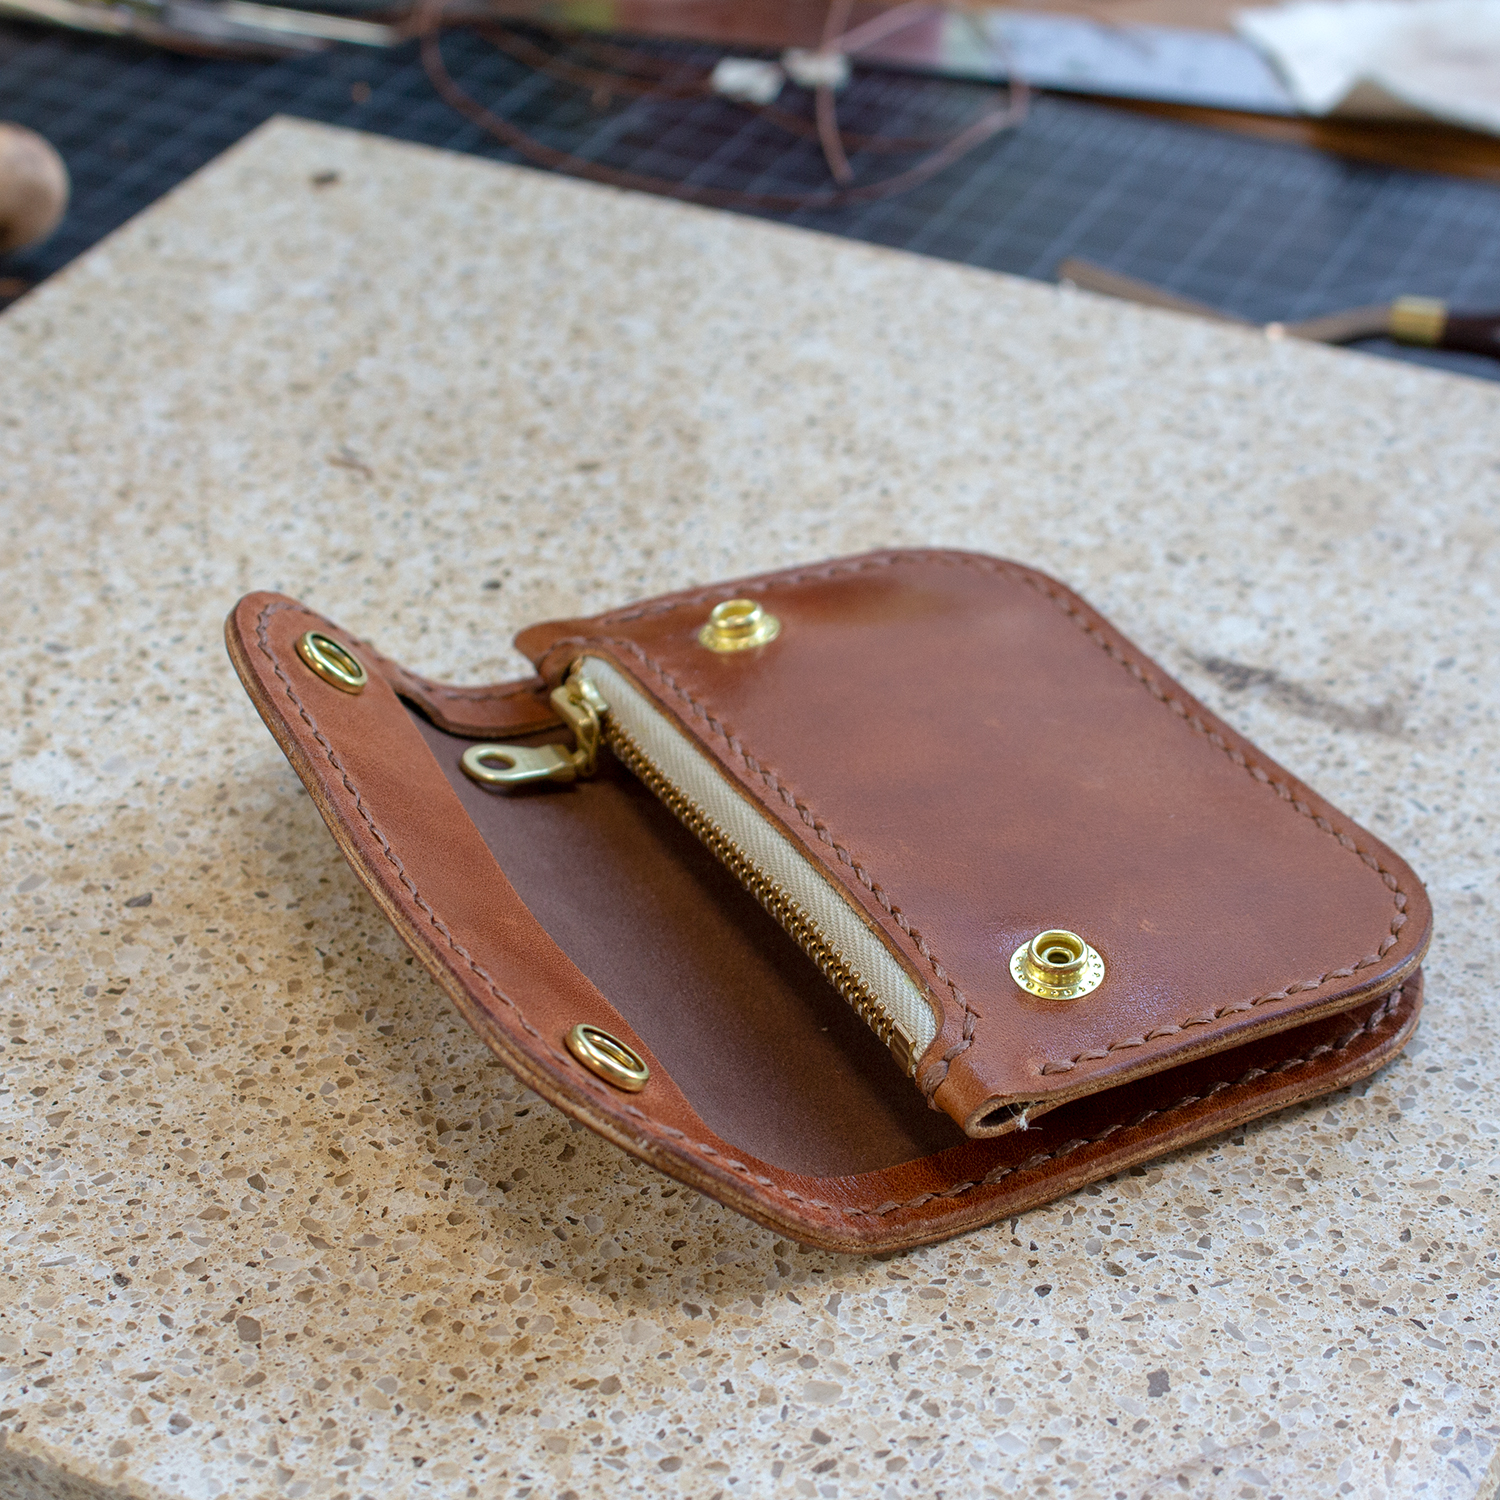 Making A Leather Tri-Fold Wallet - Free PDF Template Set